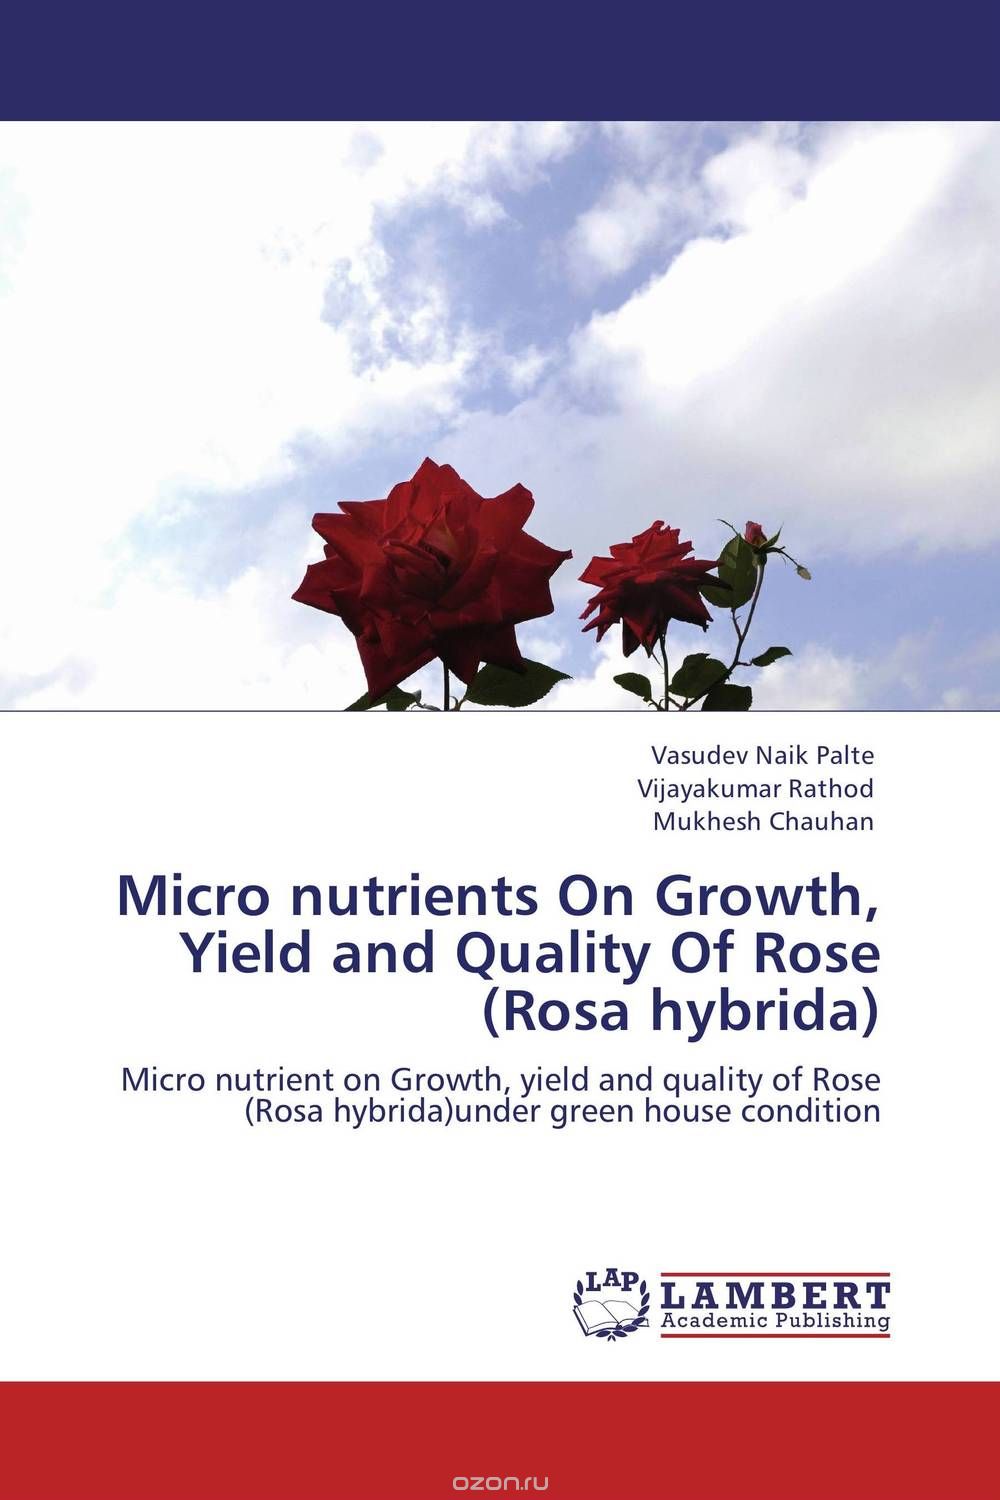 Скачать книгу "Micro nutrients On Growth, Yield and Quality Of Rose (Rosa hybrida)"